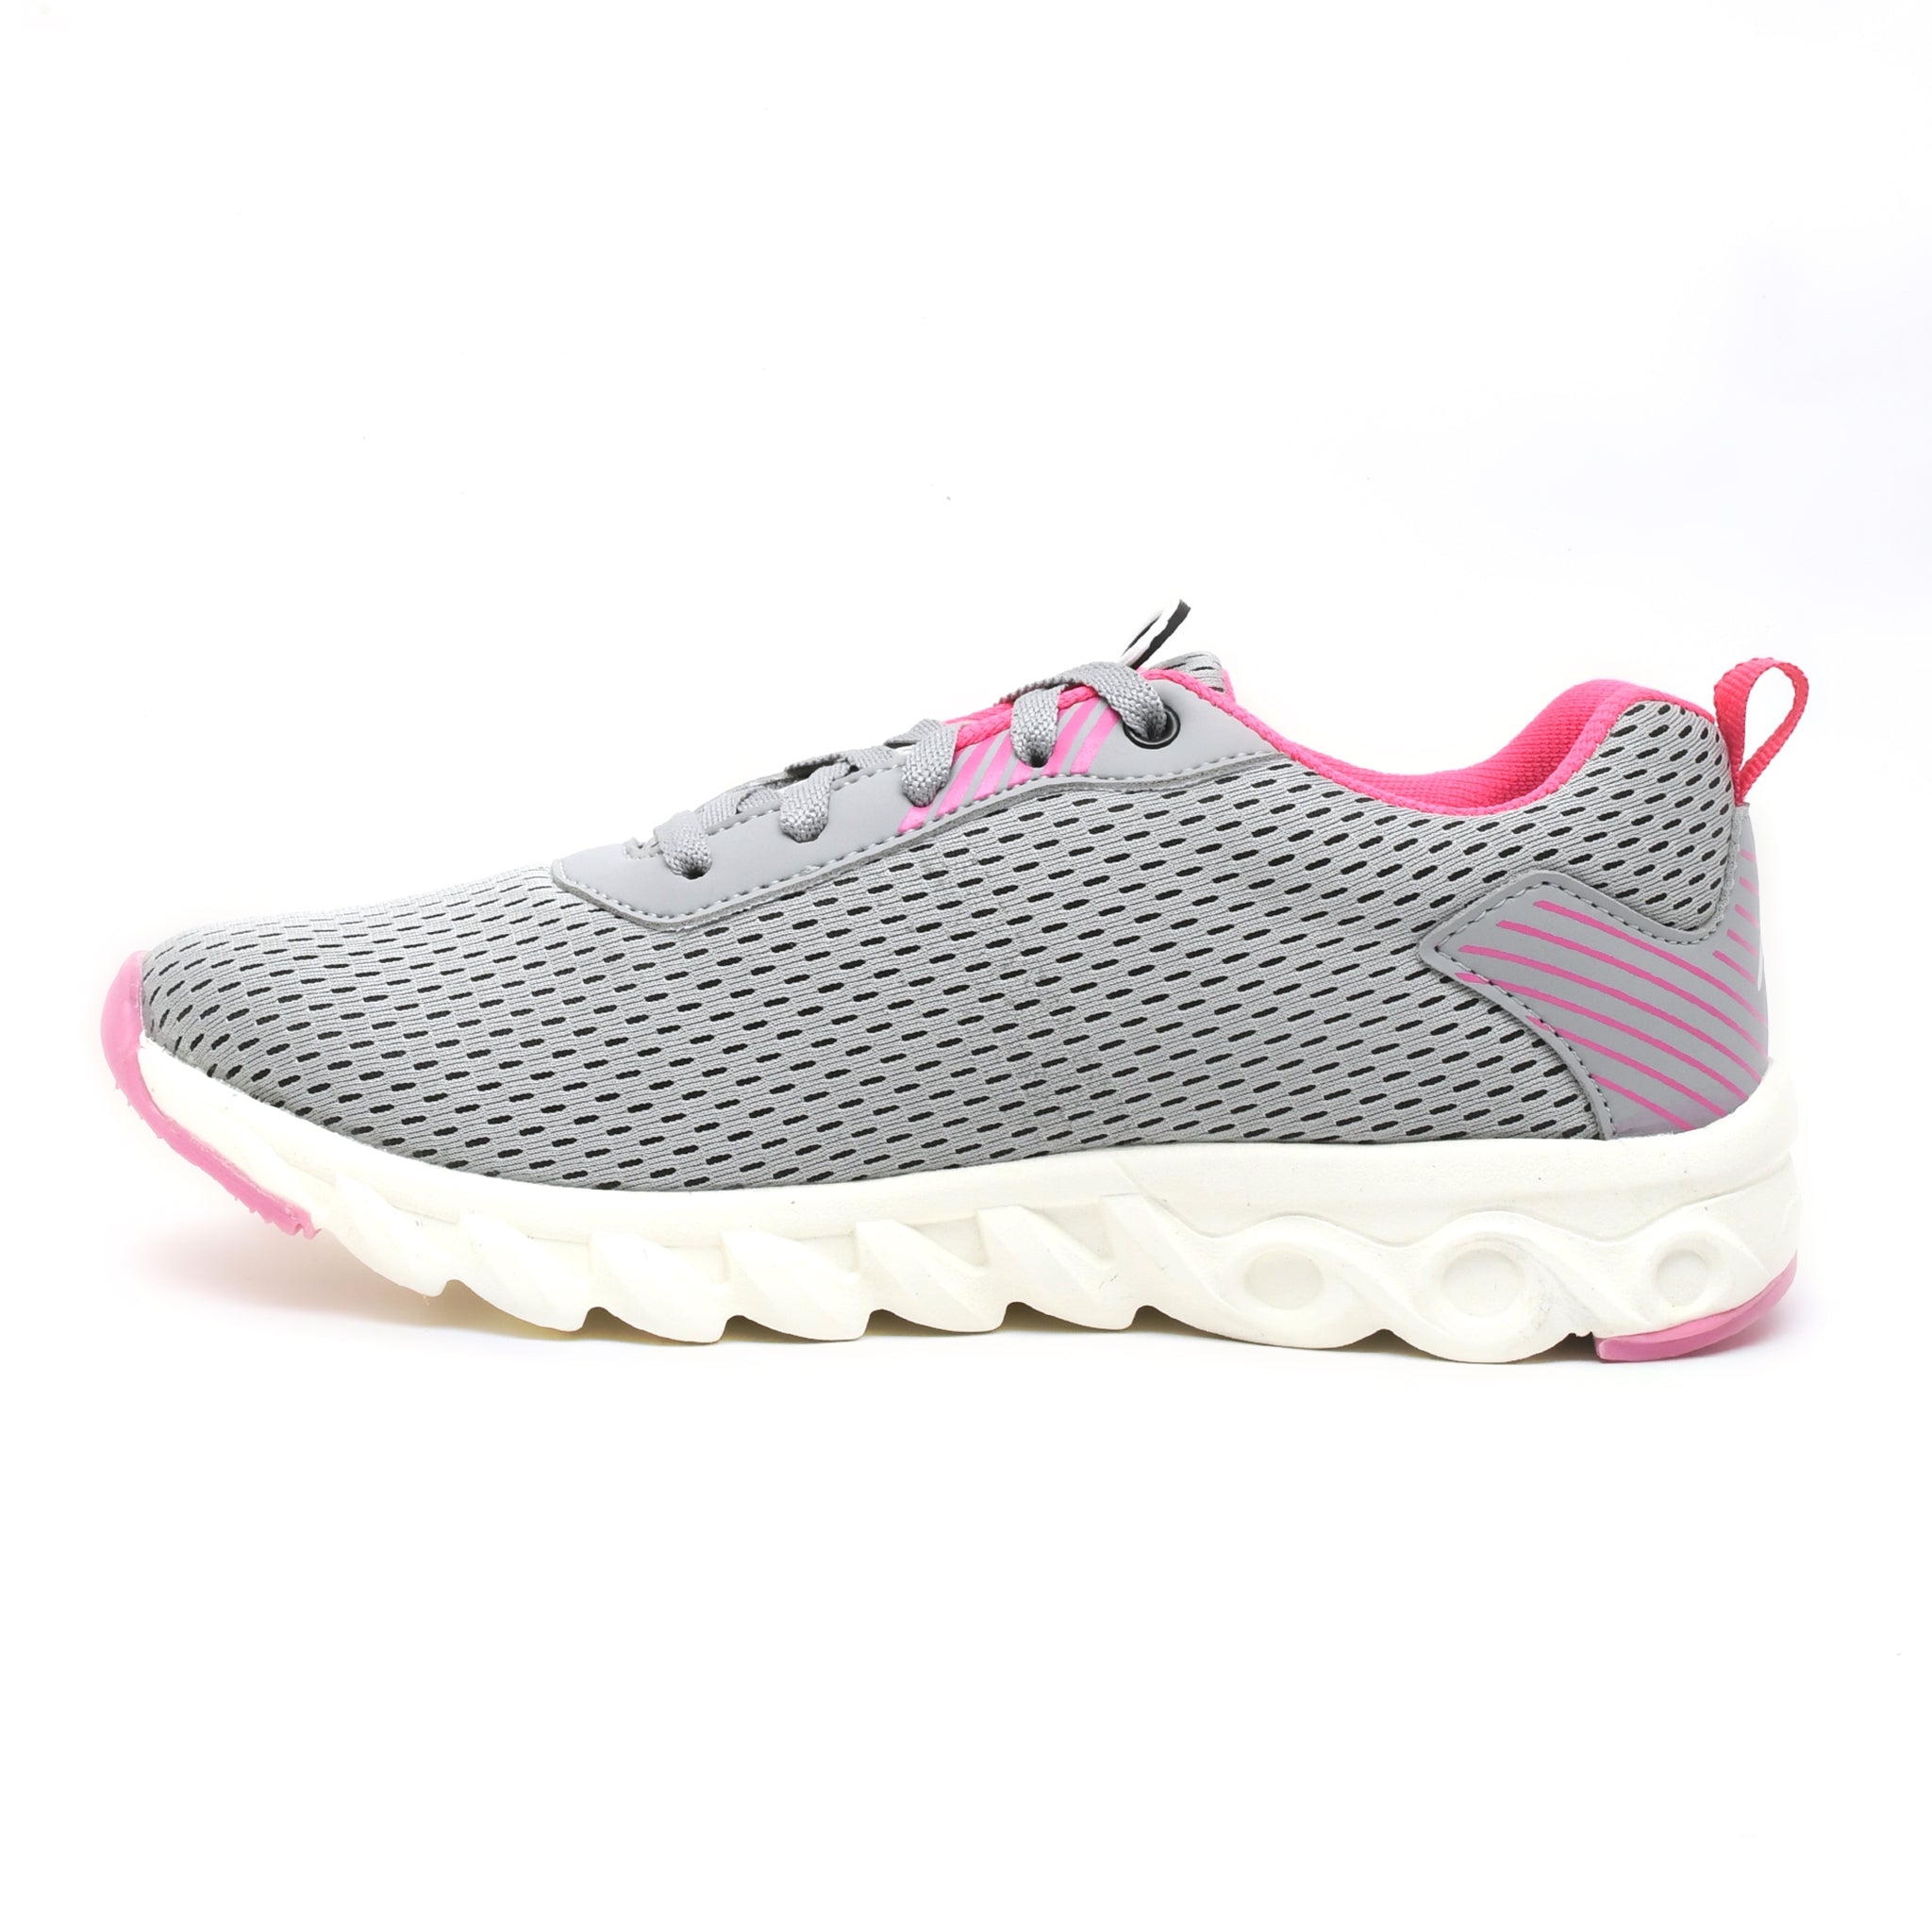 Impakto MotionMoxie Women's Grey Running Shoes